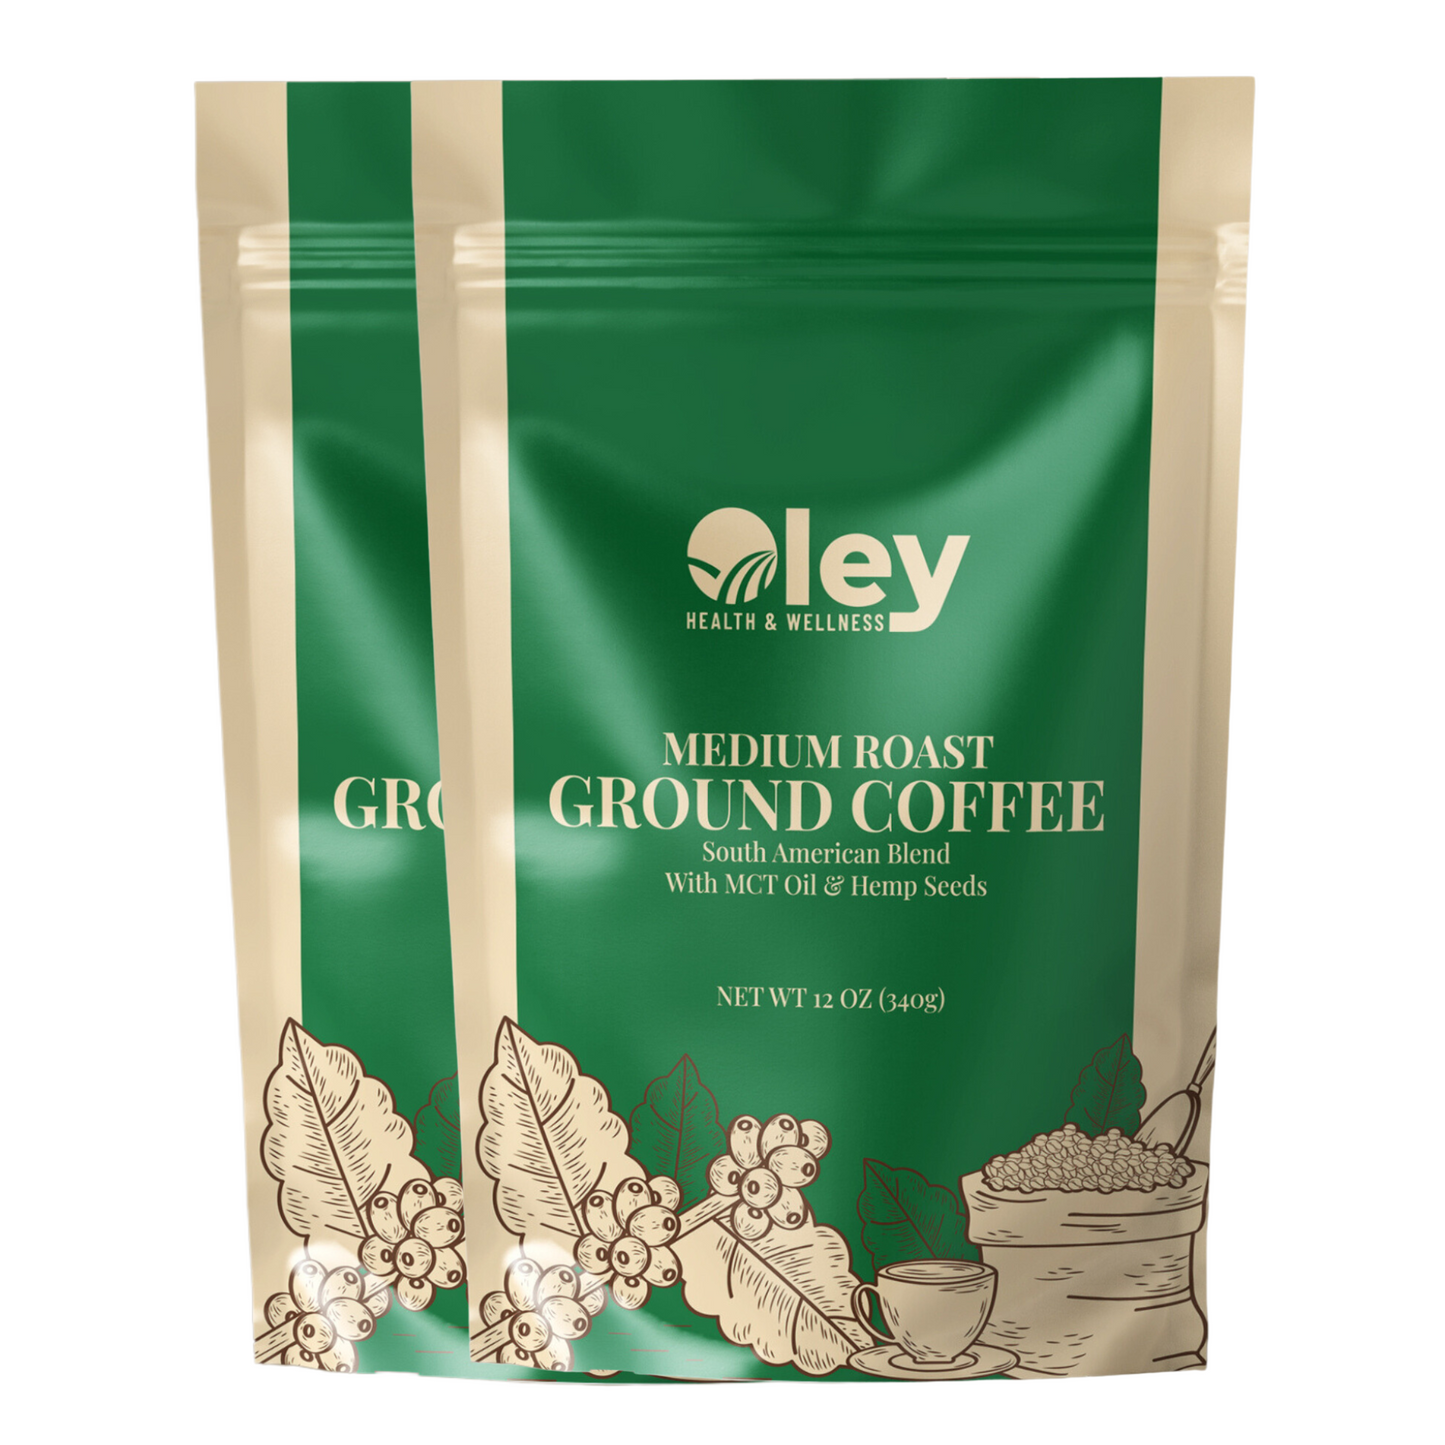 Medium Roast Ground Coffee with MCT Oil & Hemp Seeds - Low Acidity